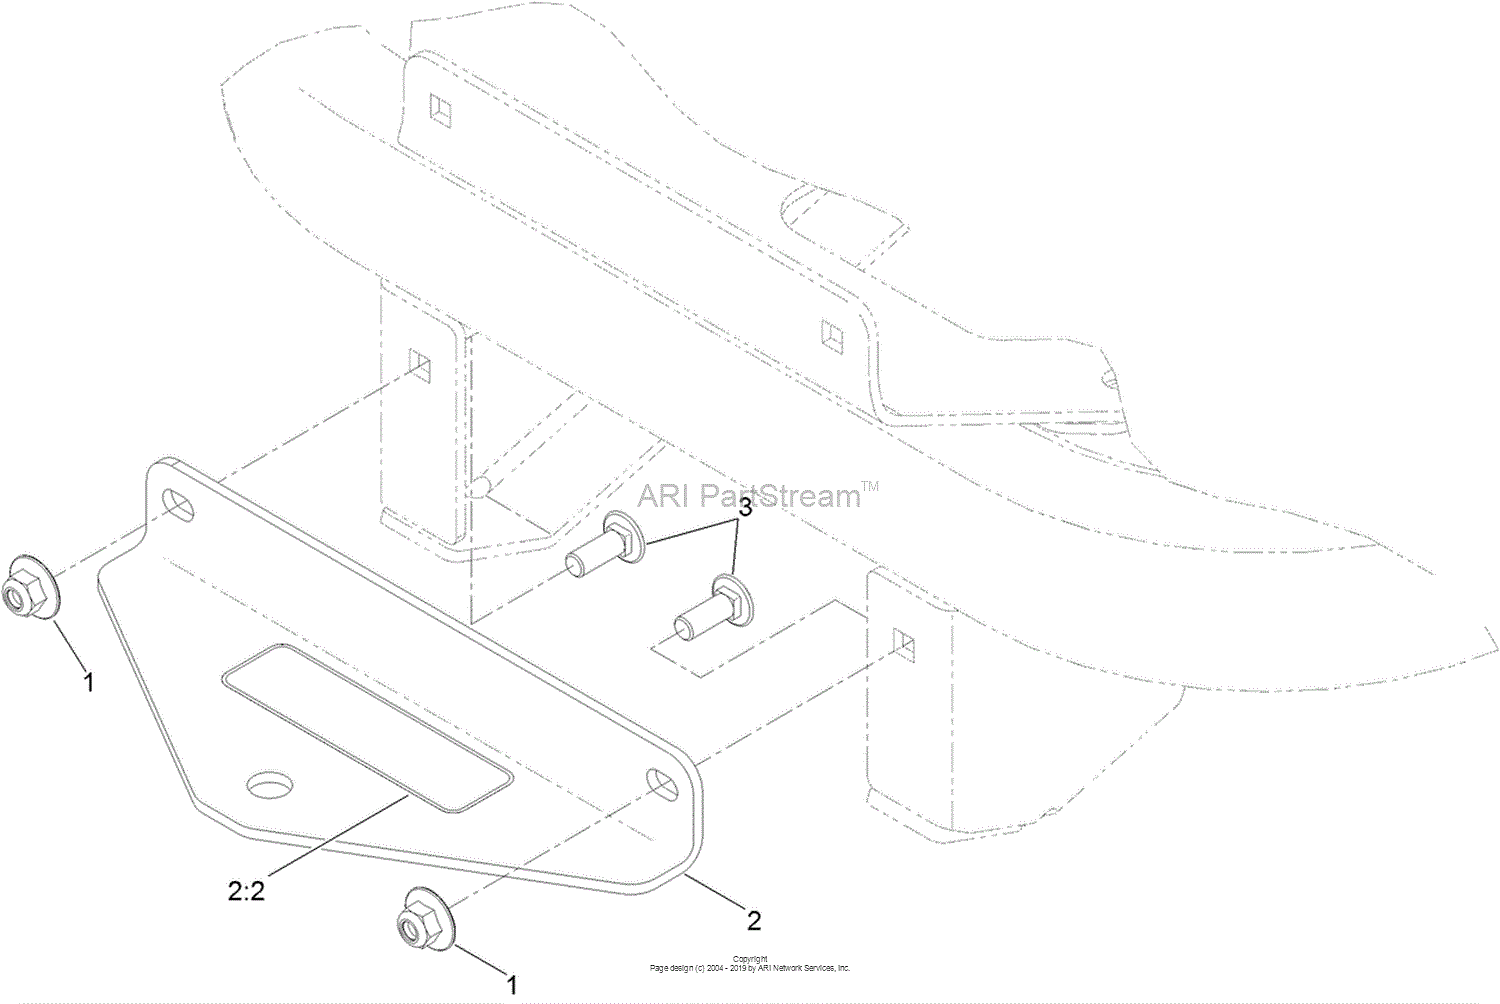 https://az417944.vo.msecnd.net/diagrams/manufacturer/toro-pro/attachments/120-3290-hitch-kit-z-master-2000-series-riding-mower/hitch-kit-no-120-3290/diagram.gif